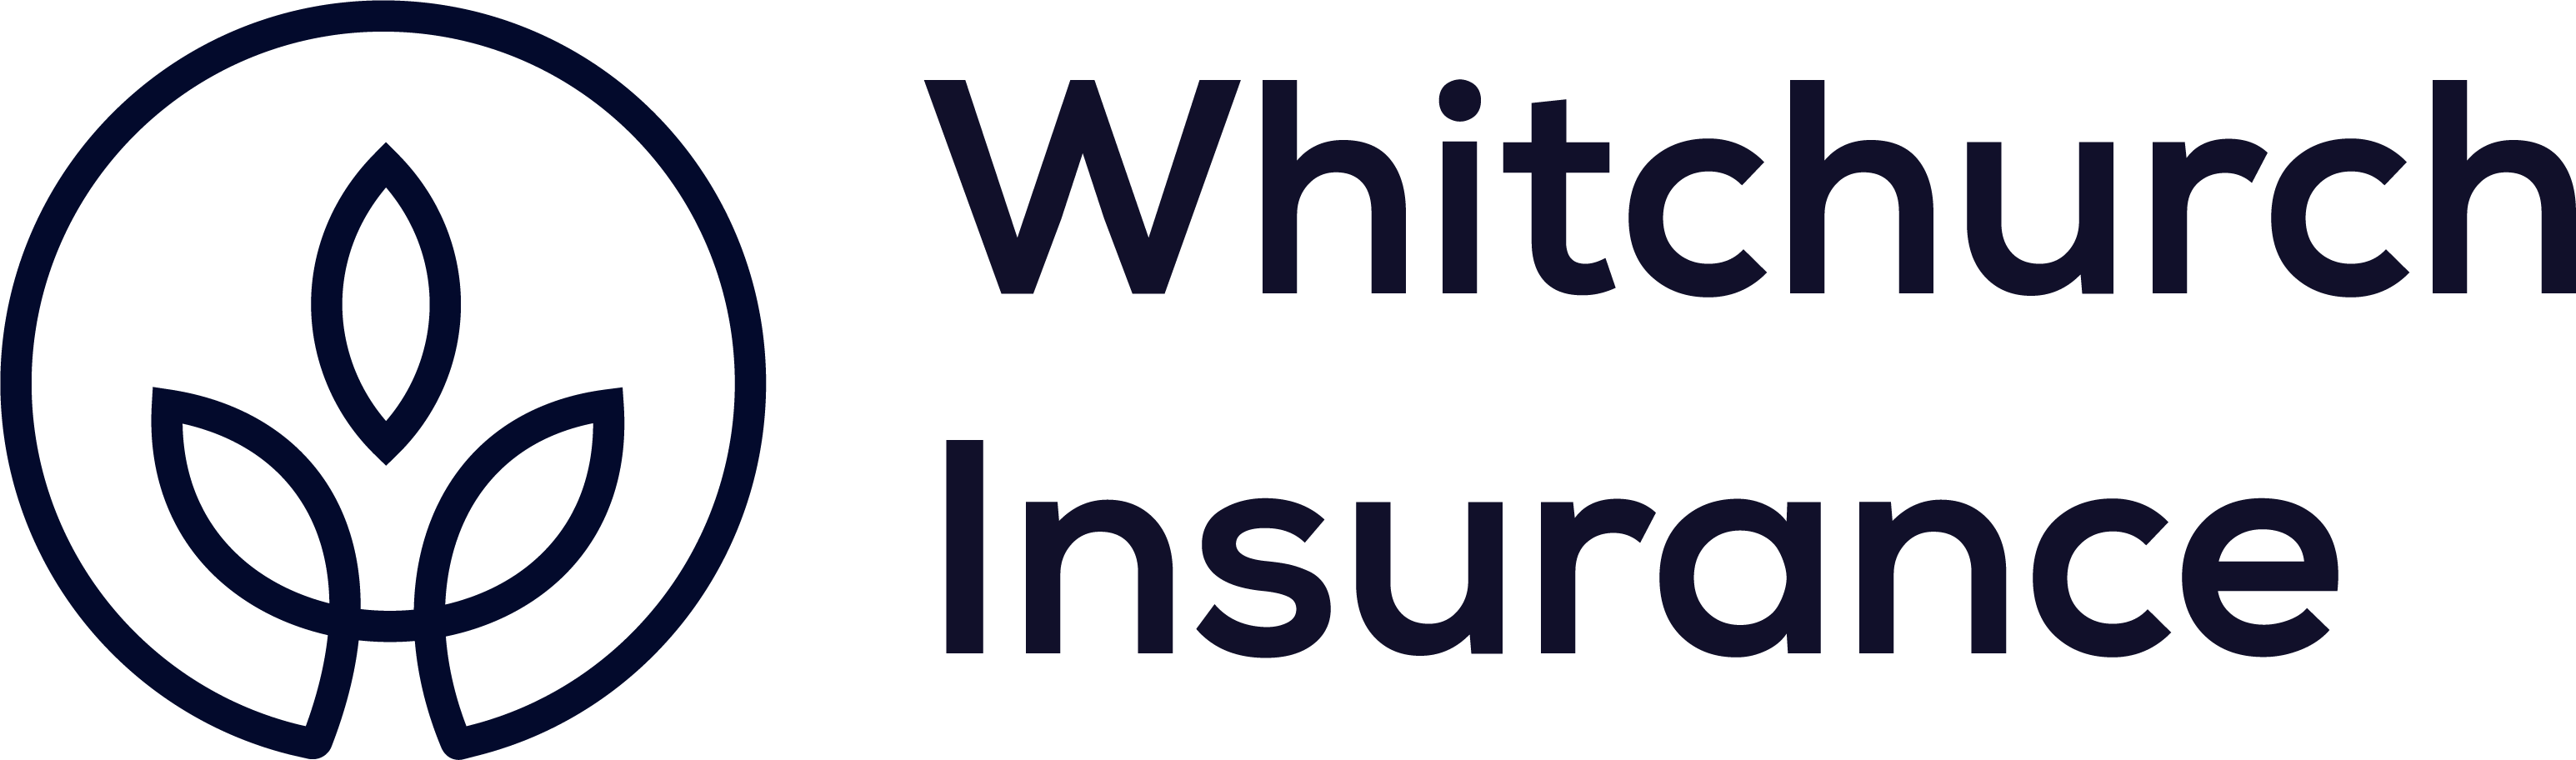 Whitchurch Insurance